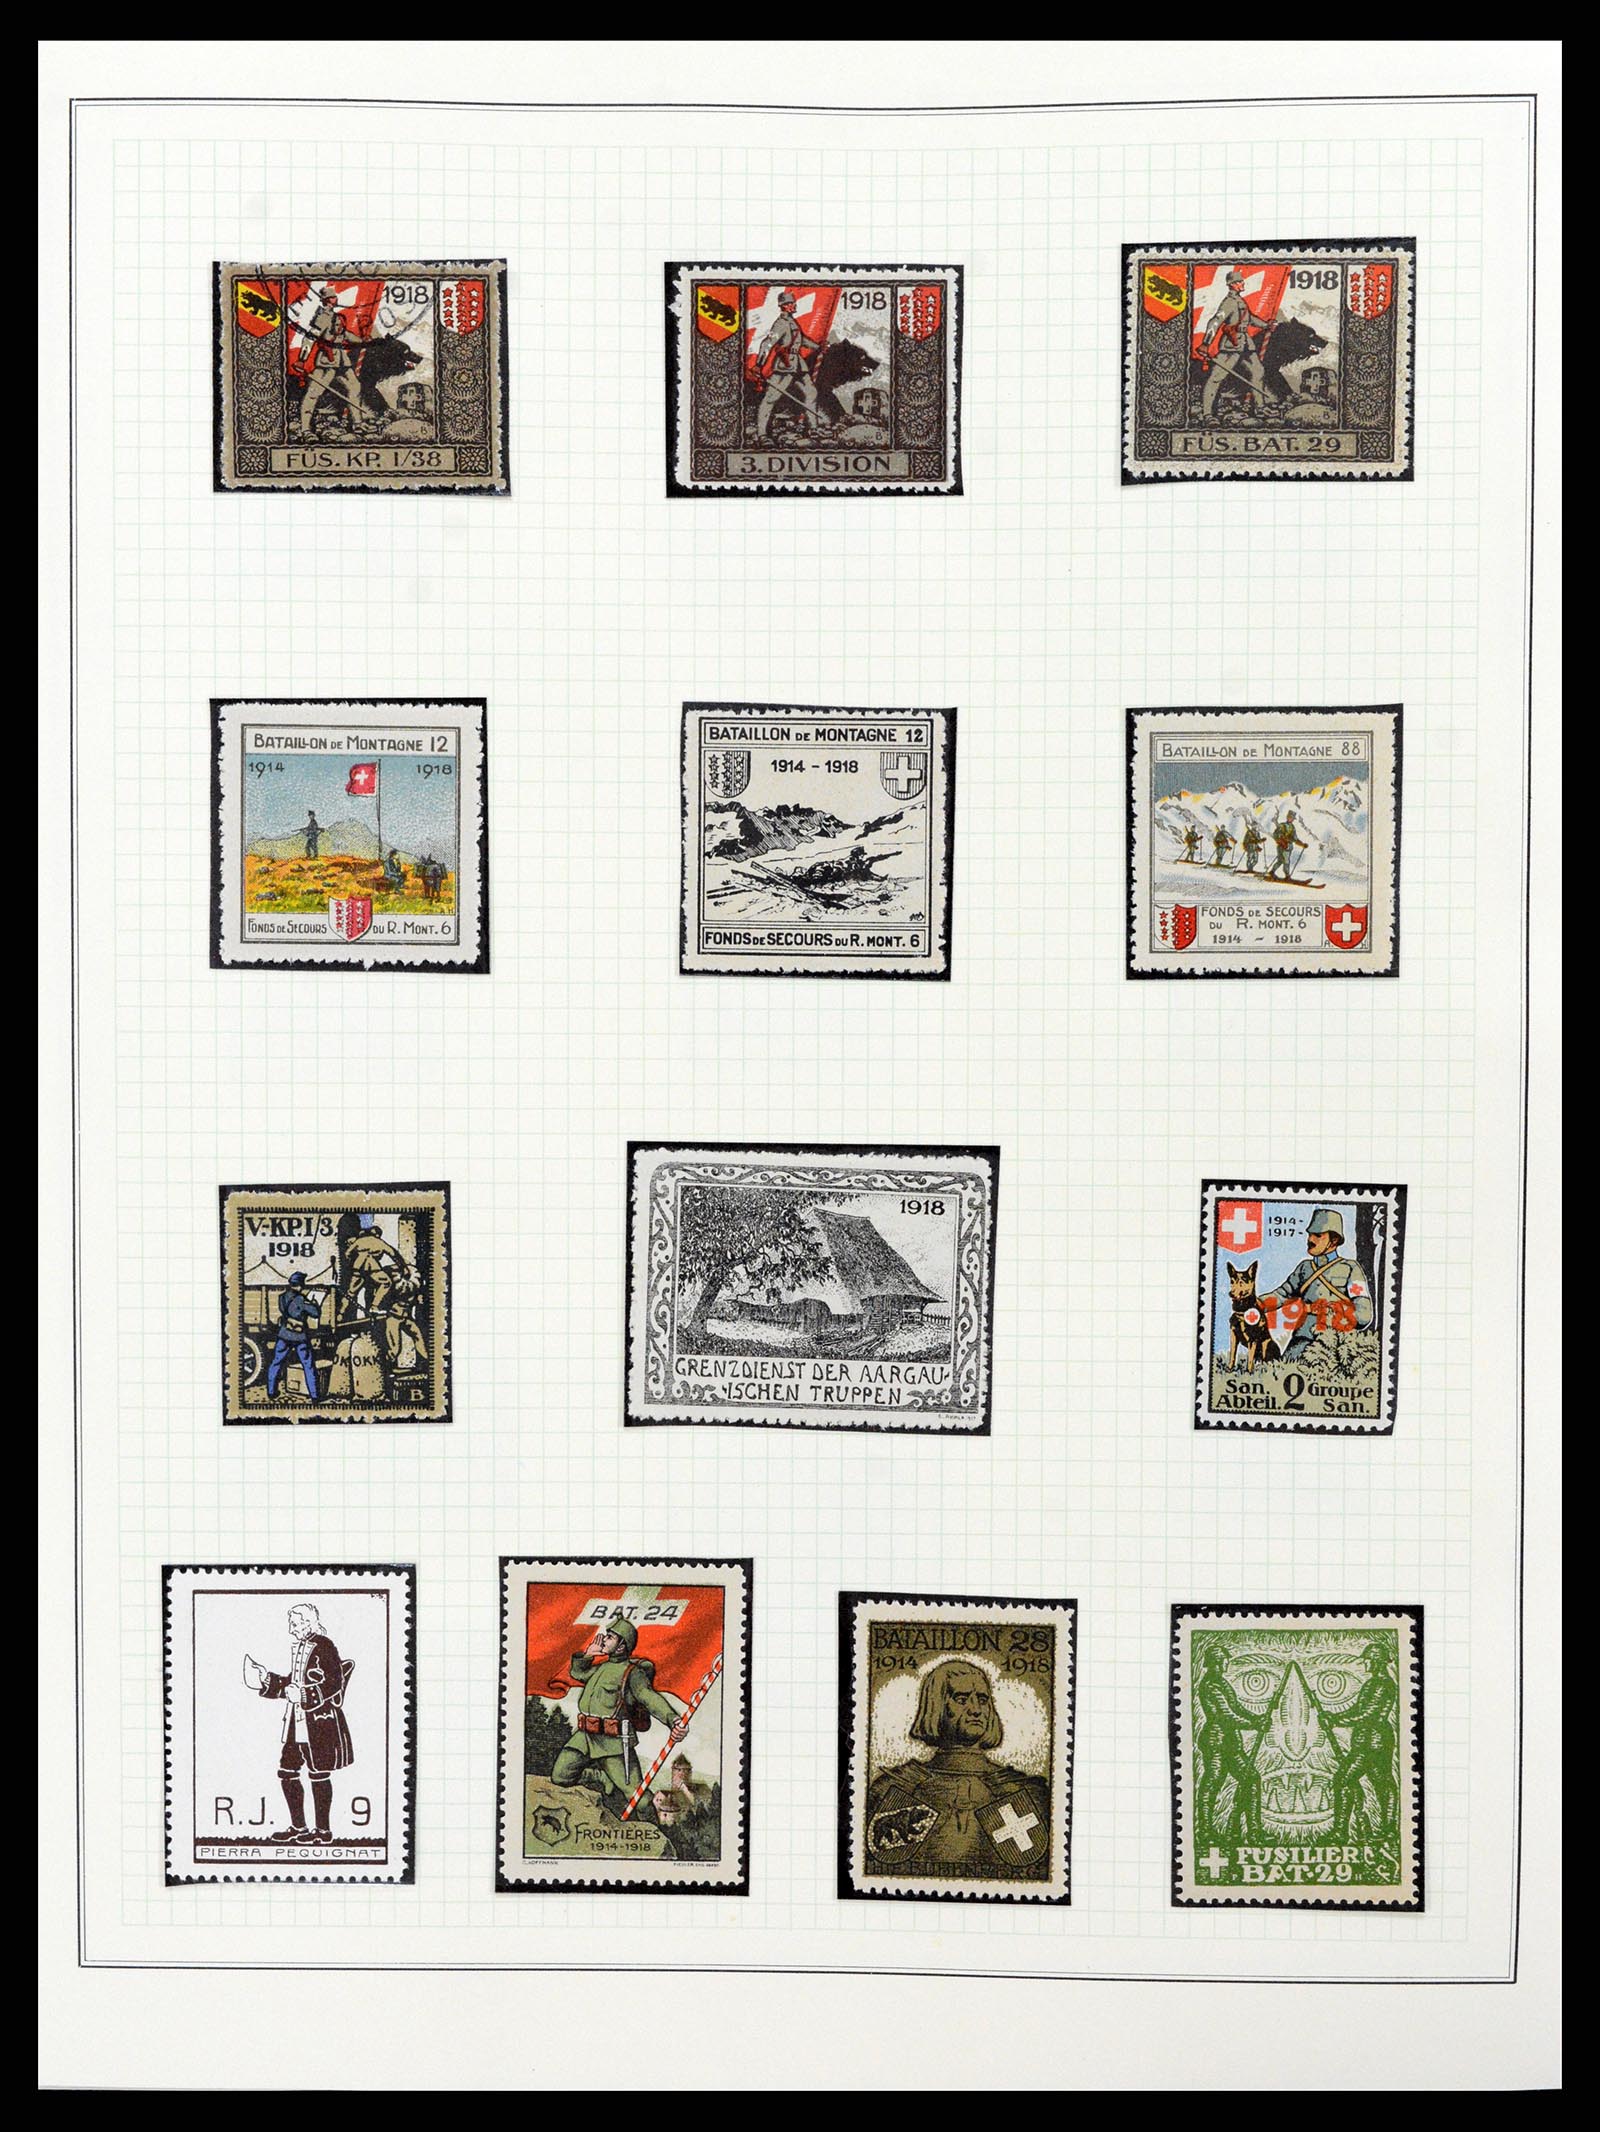 37642 001 - Stamp collection 37642 Switzerland soldier stamps 1914-1945.